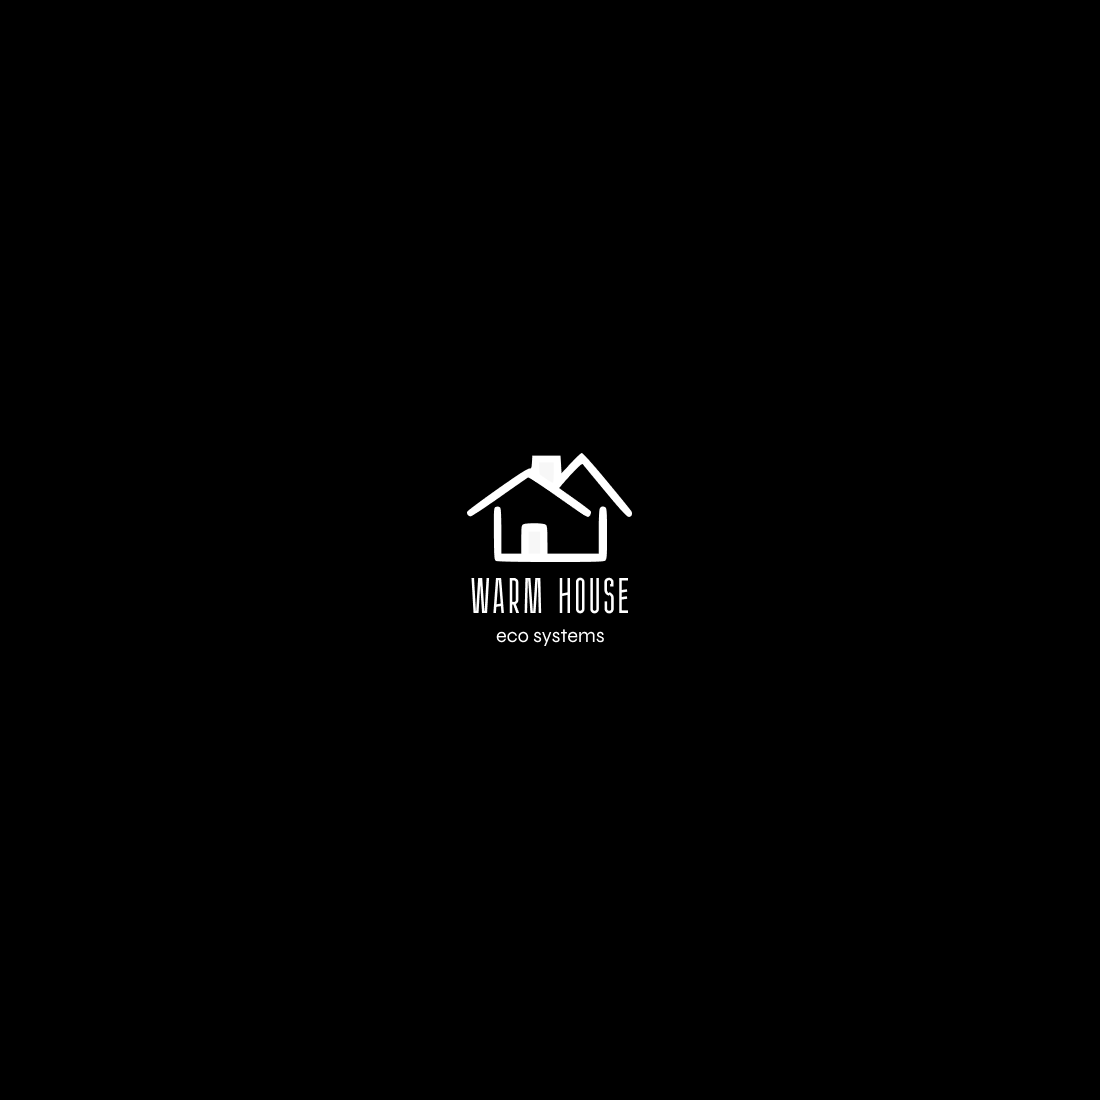 Logo design Warm House cover image.